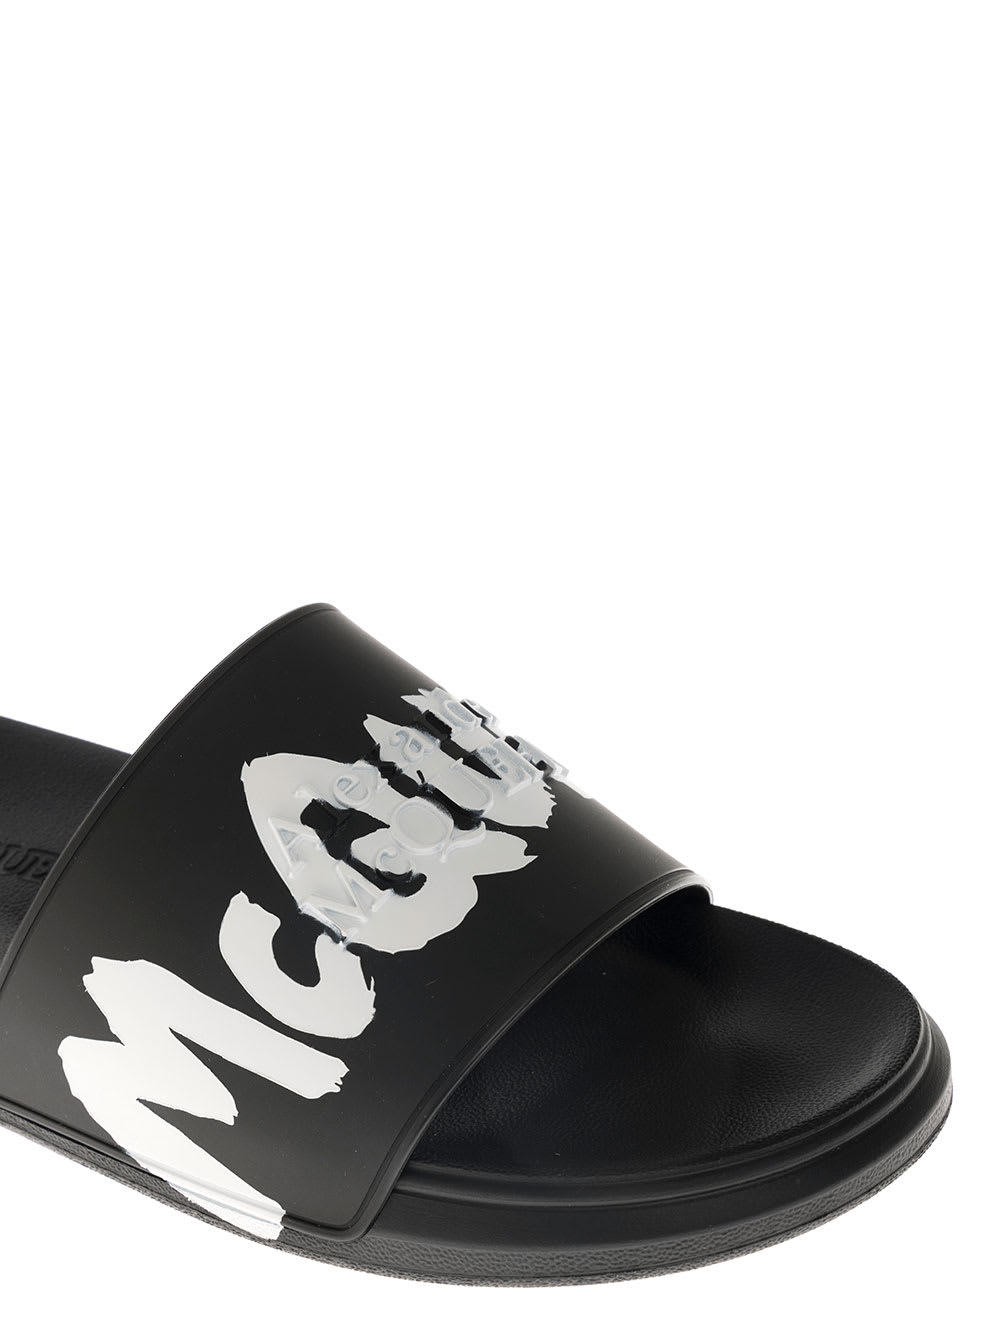 Shop Alexander Mcqueen Mans Black Rubber Slide Sandals With Logo